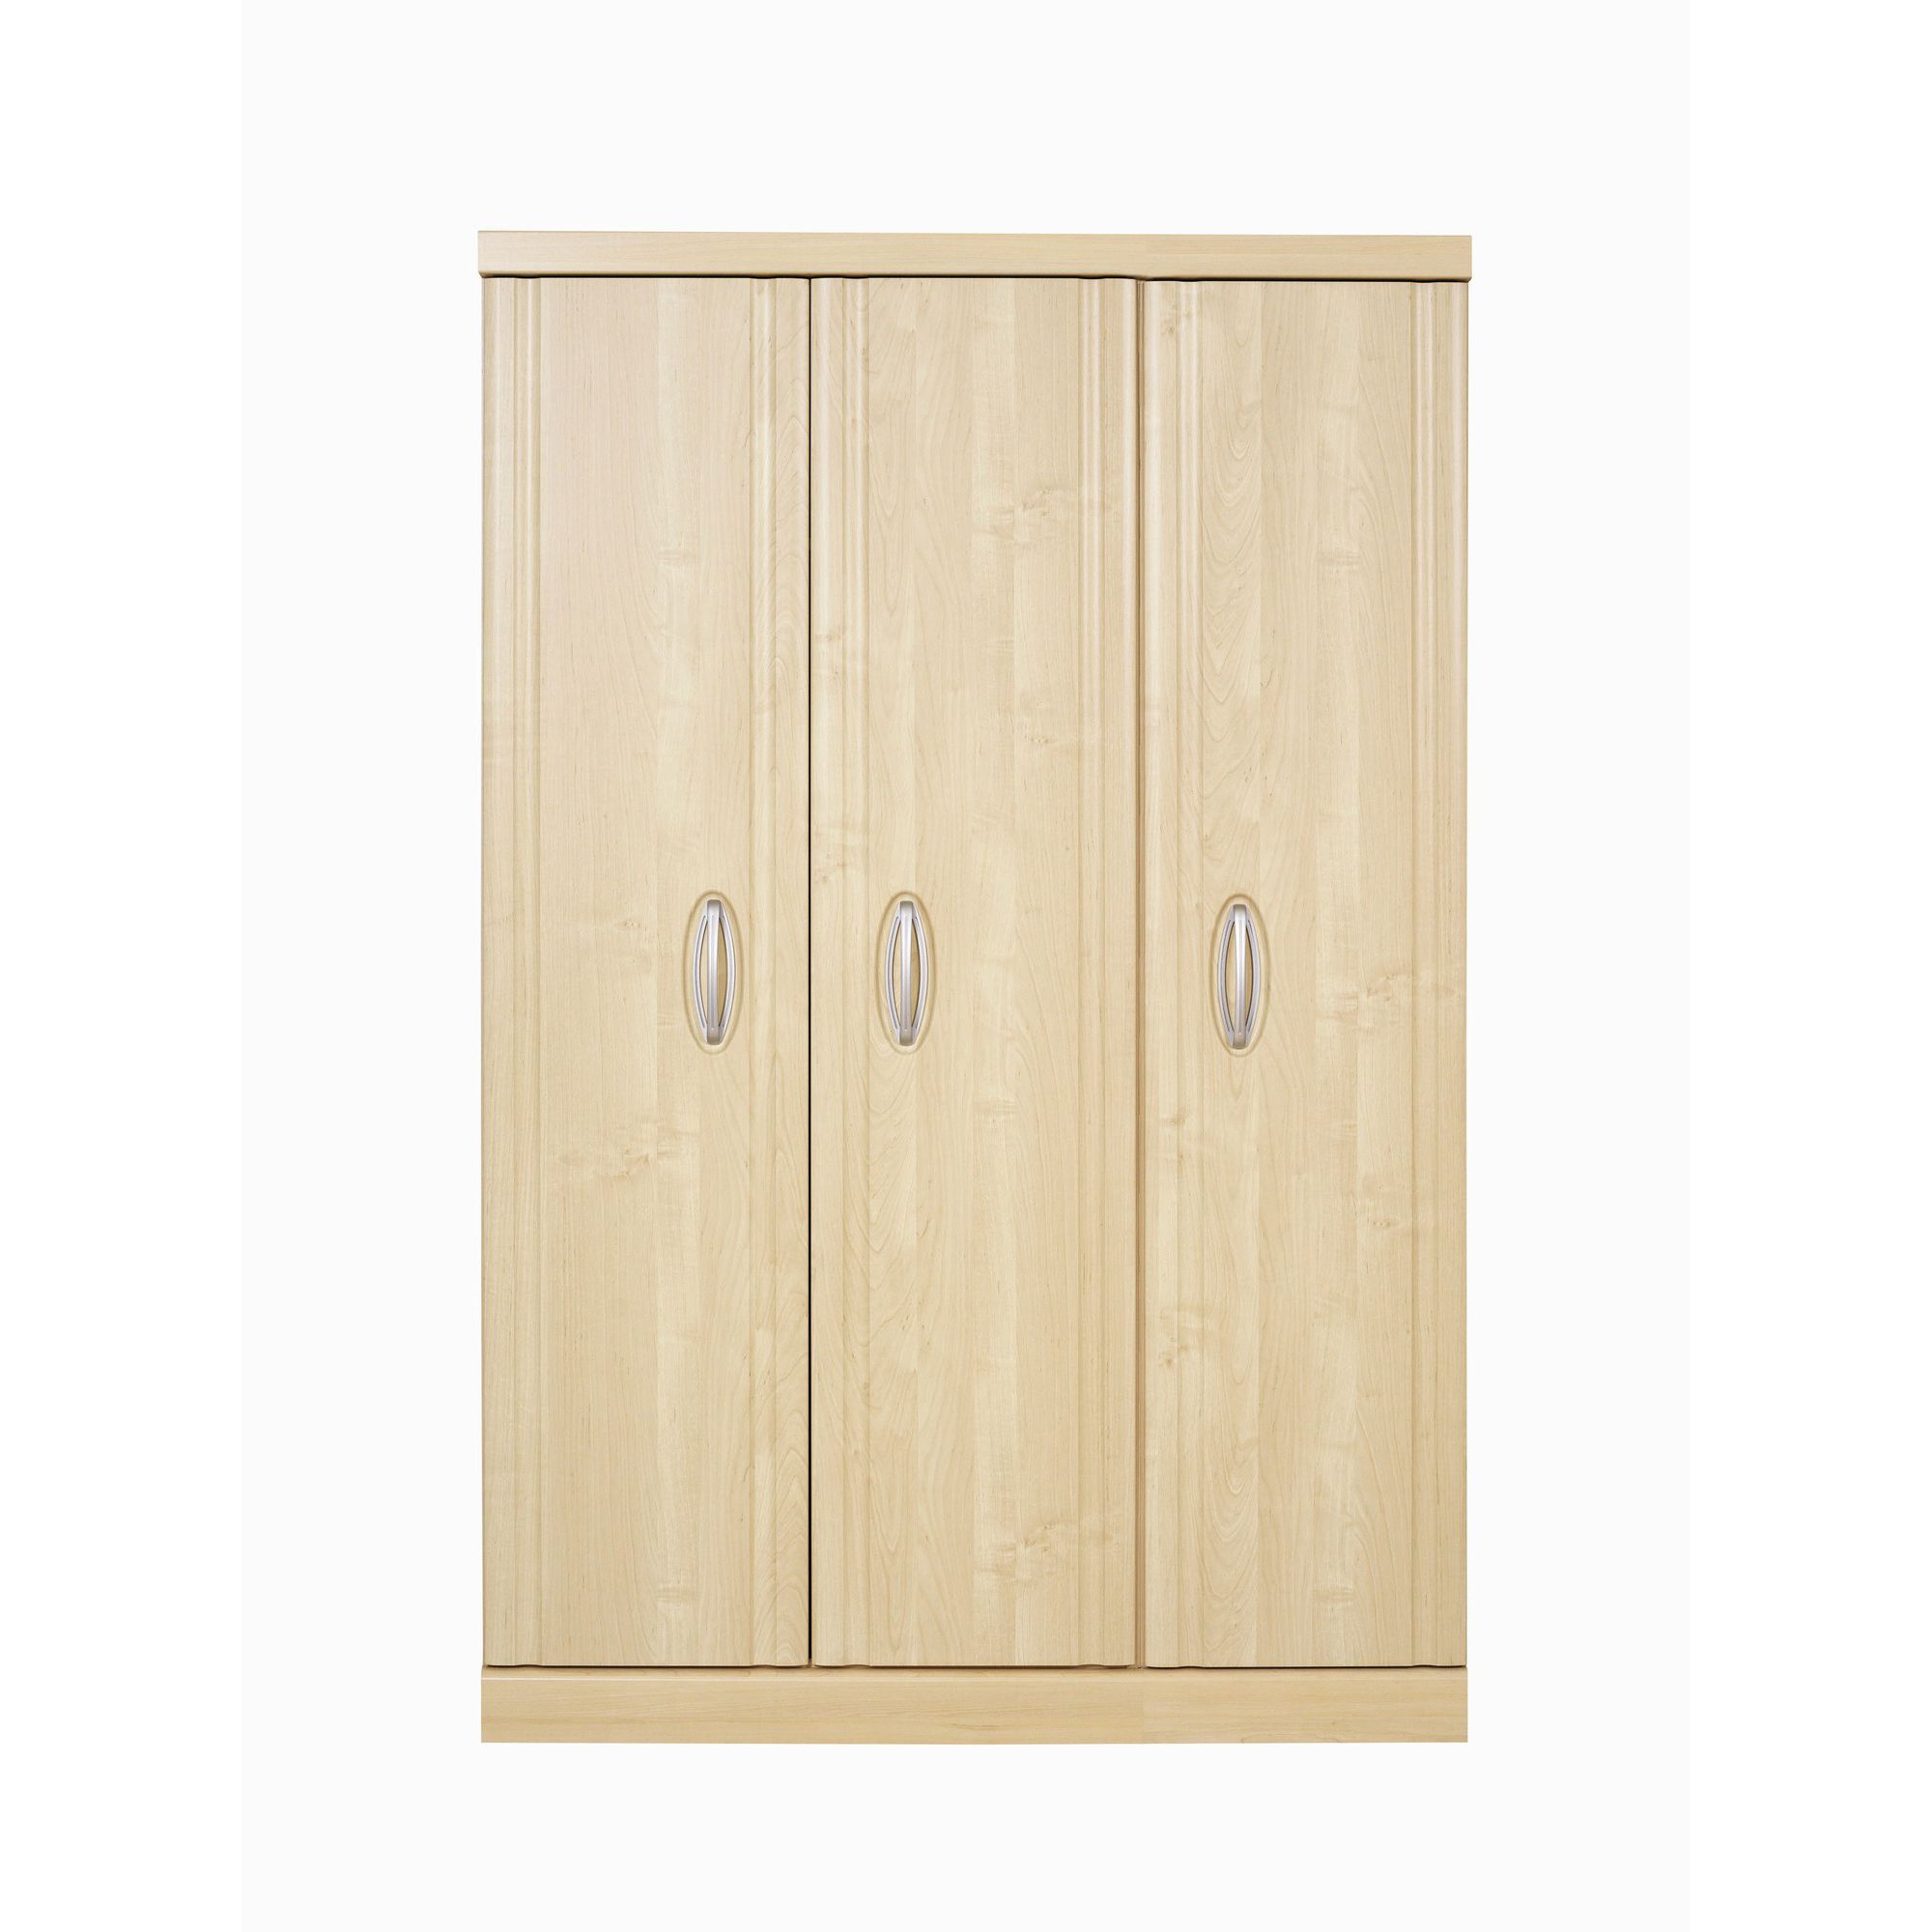 Caxton Strata 3 Door Short Height Wardrobe in Pear Wood at Tesco Direct